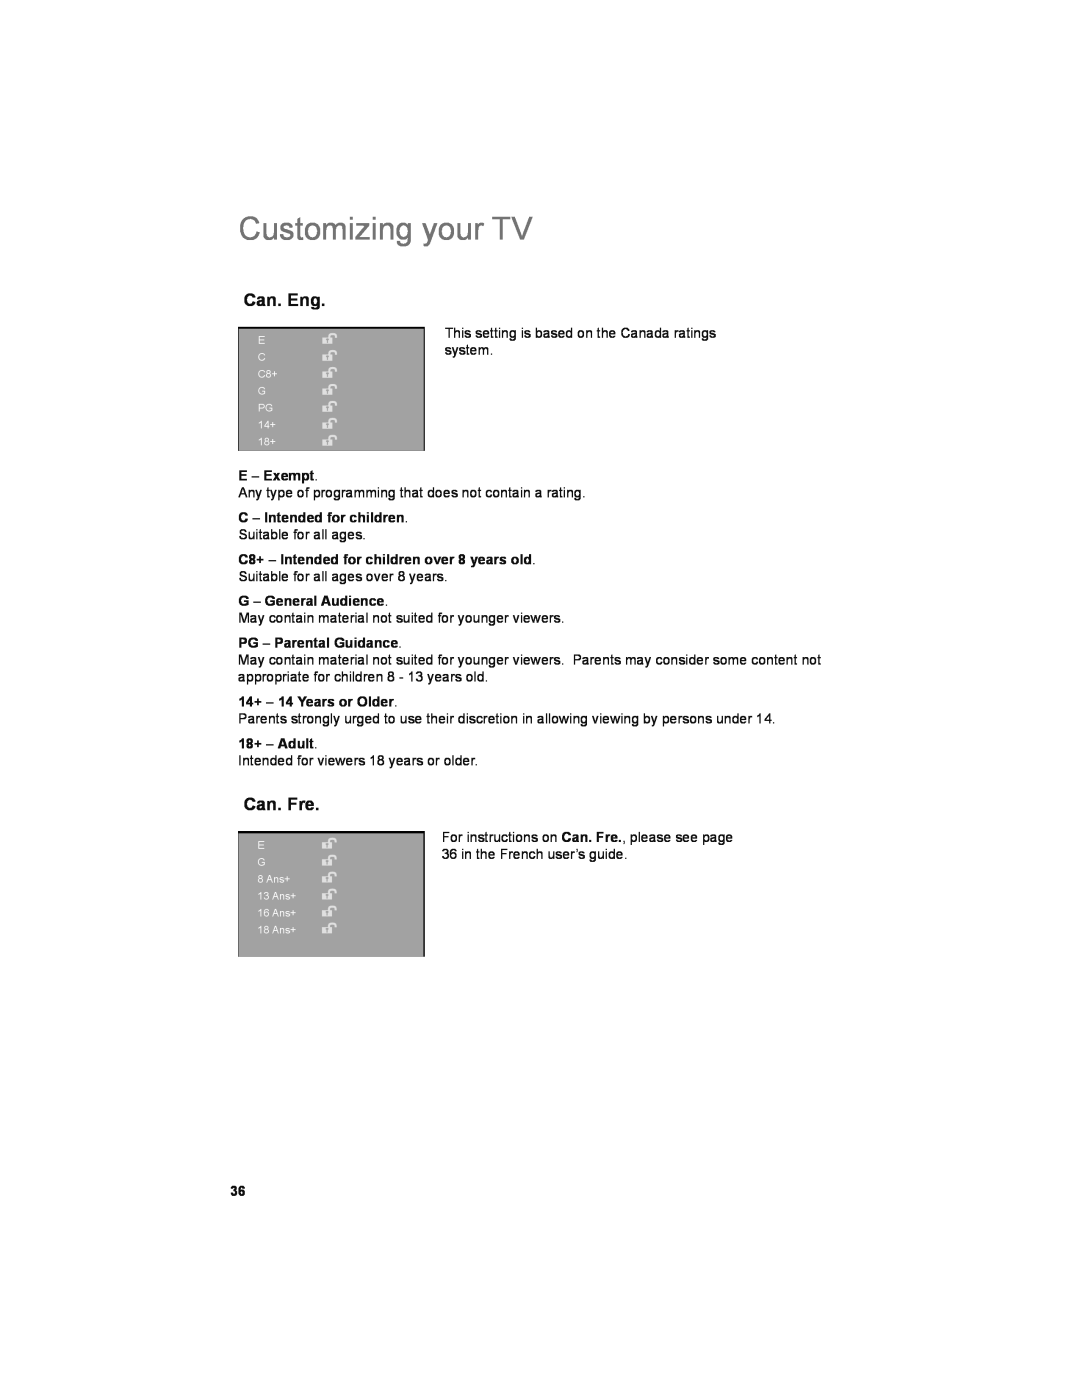 JVC LT-32JM30 Customizing your TV, E - Exempt, C - Intended for children, C8+ - Intended for children over 8 years old 